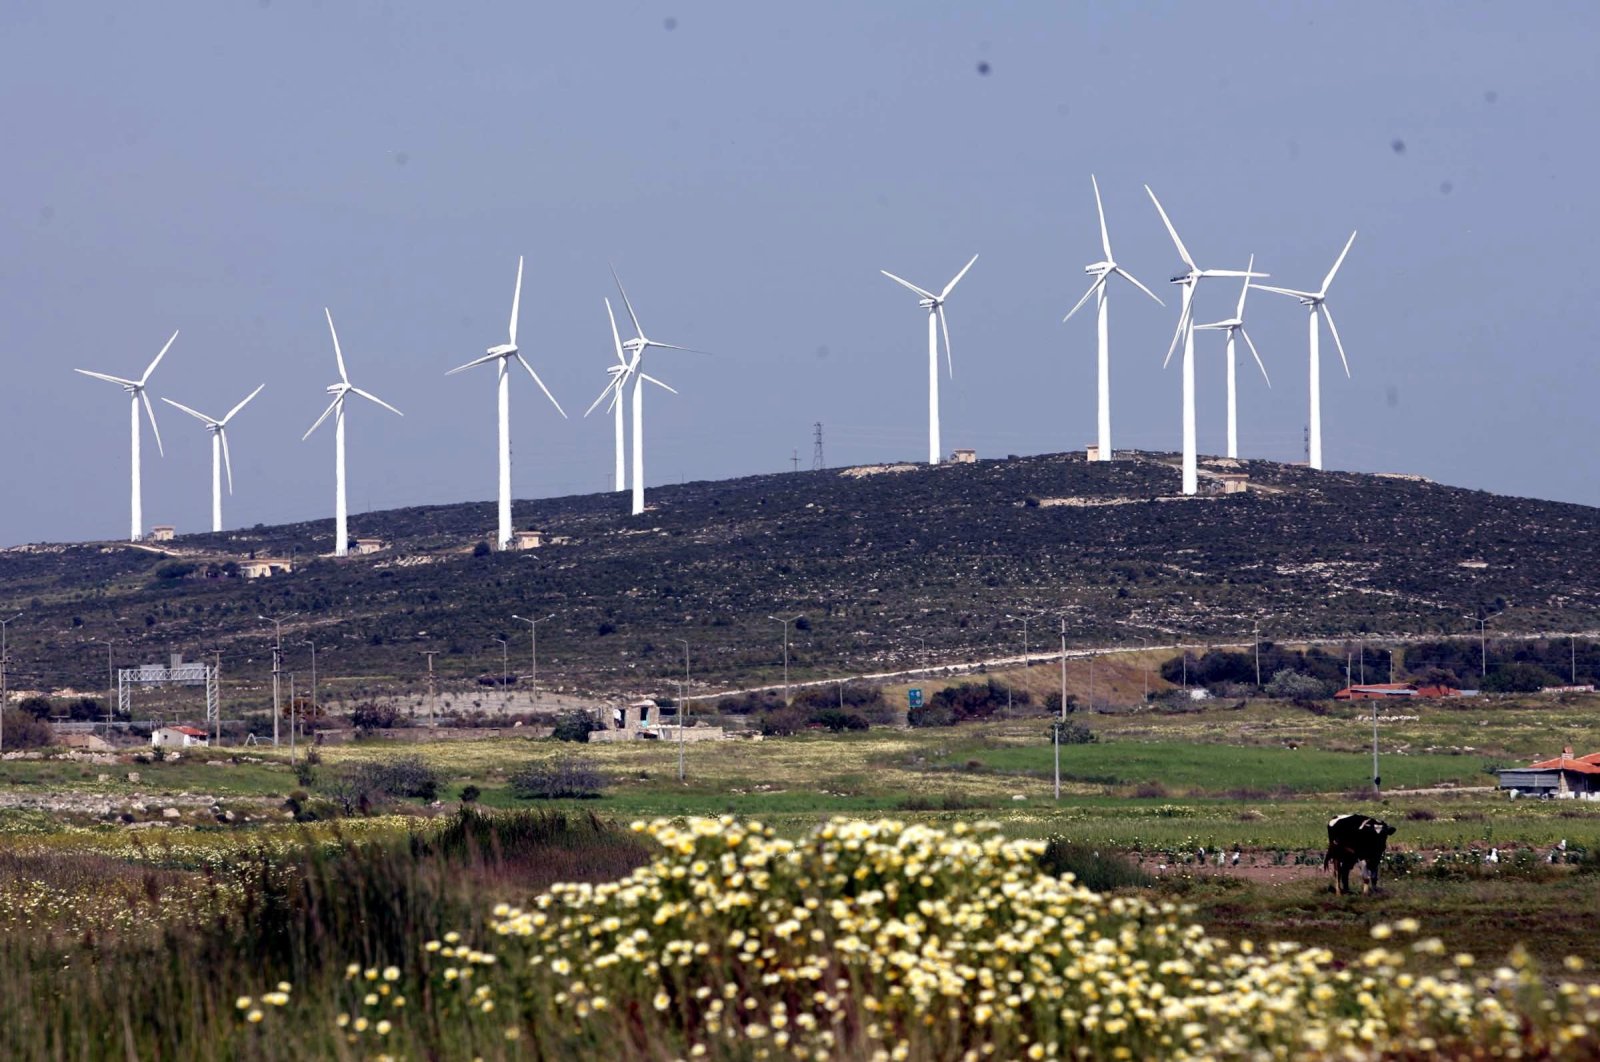 Wind turbines are seen in the Karaburun district of Turkey's Aegean province of Izmir, Feb. 13, 2019. (DHA Photo)